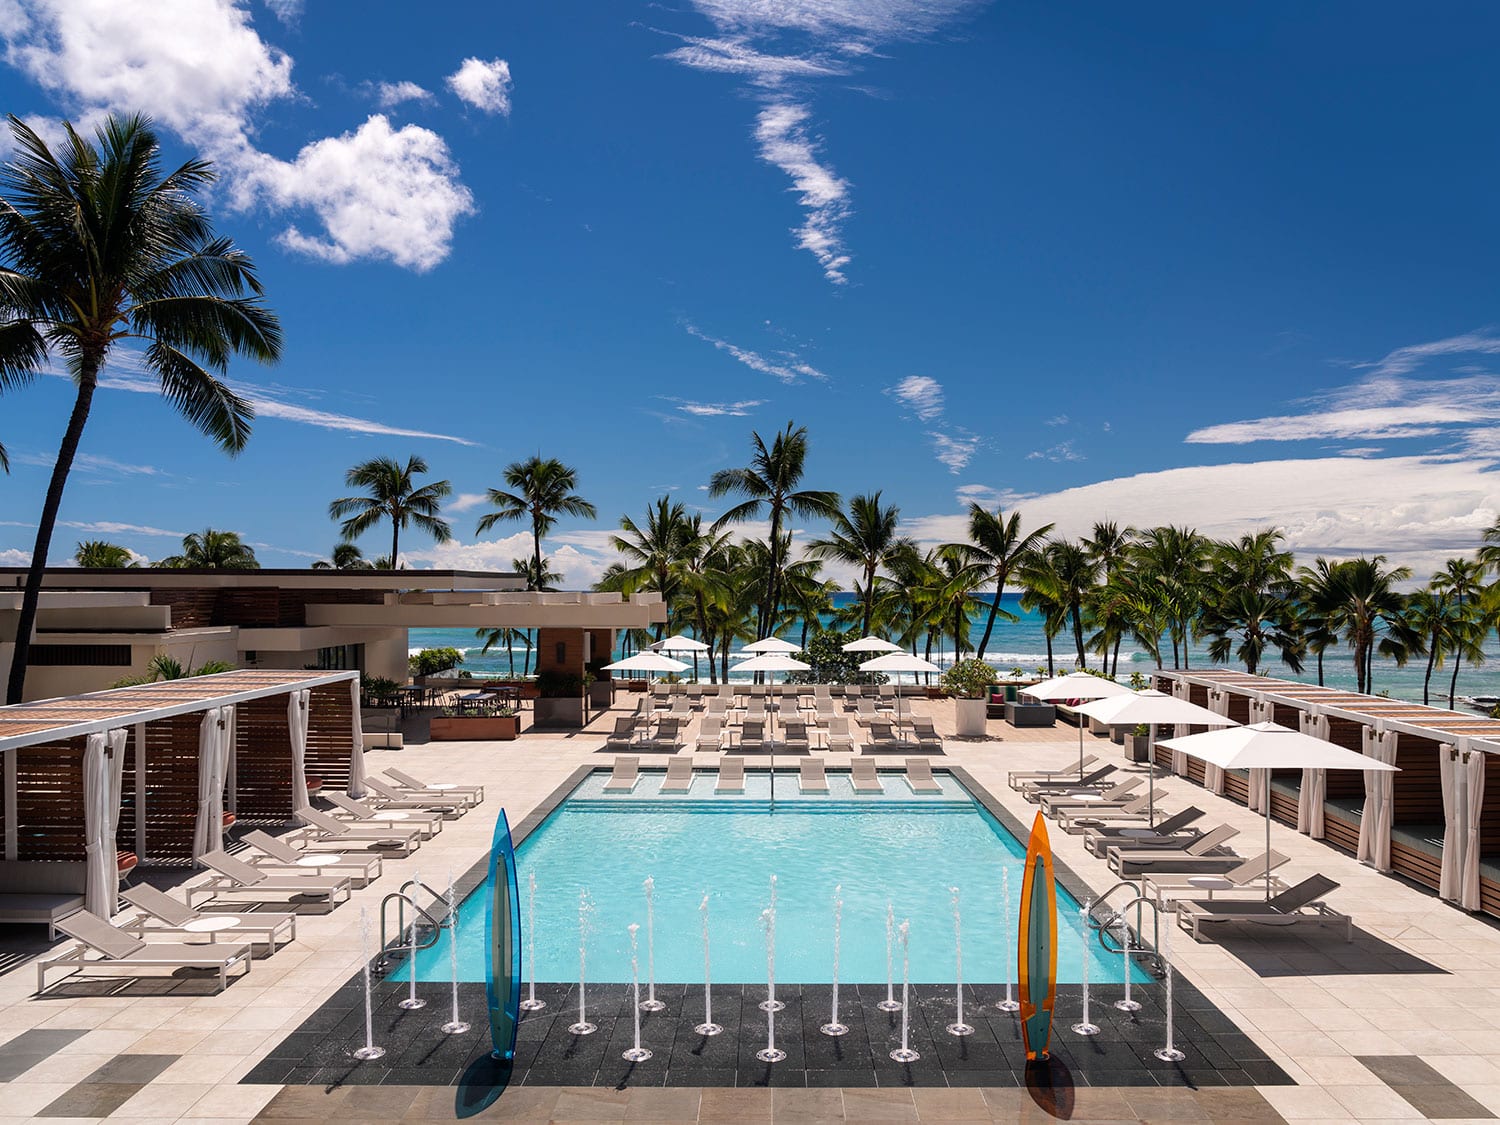 A view of the pool at Waikiki Beach Marriott Resort and Spa in Honolulu, Hawaii.